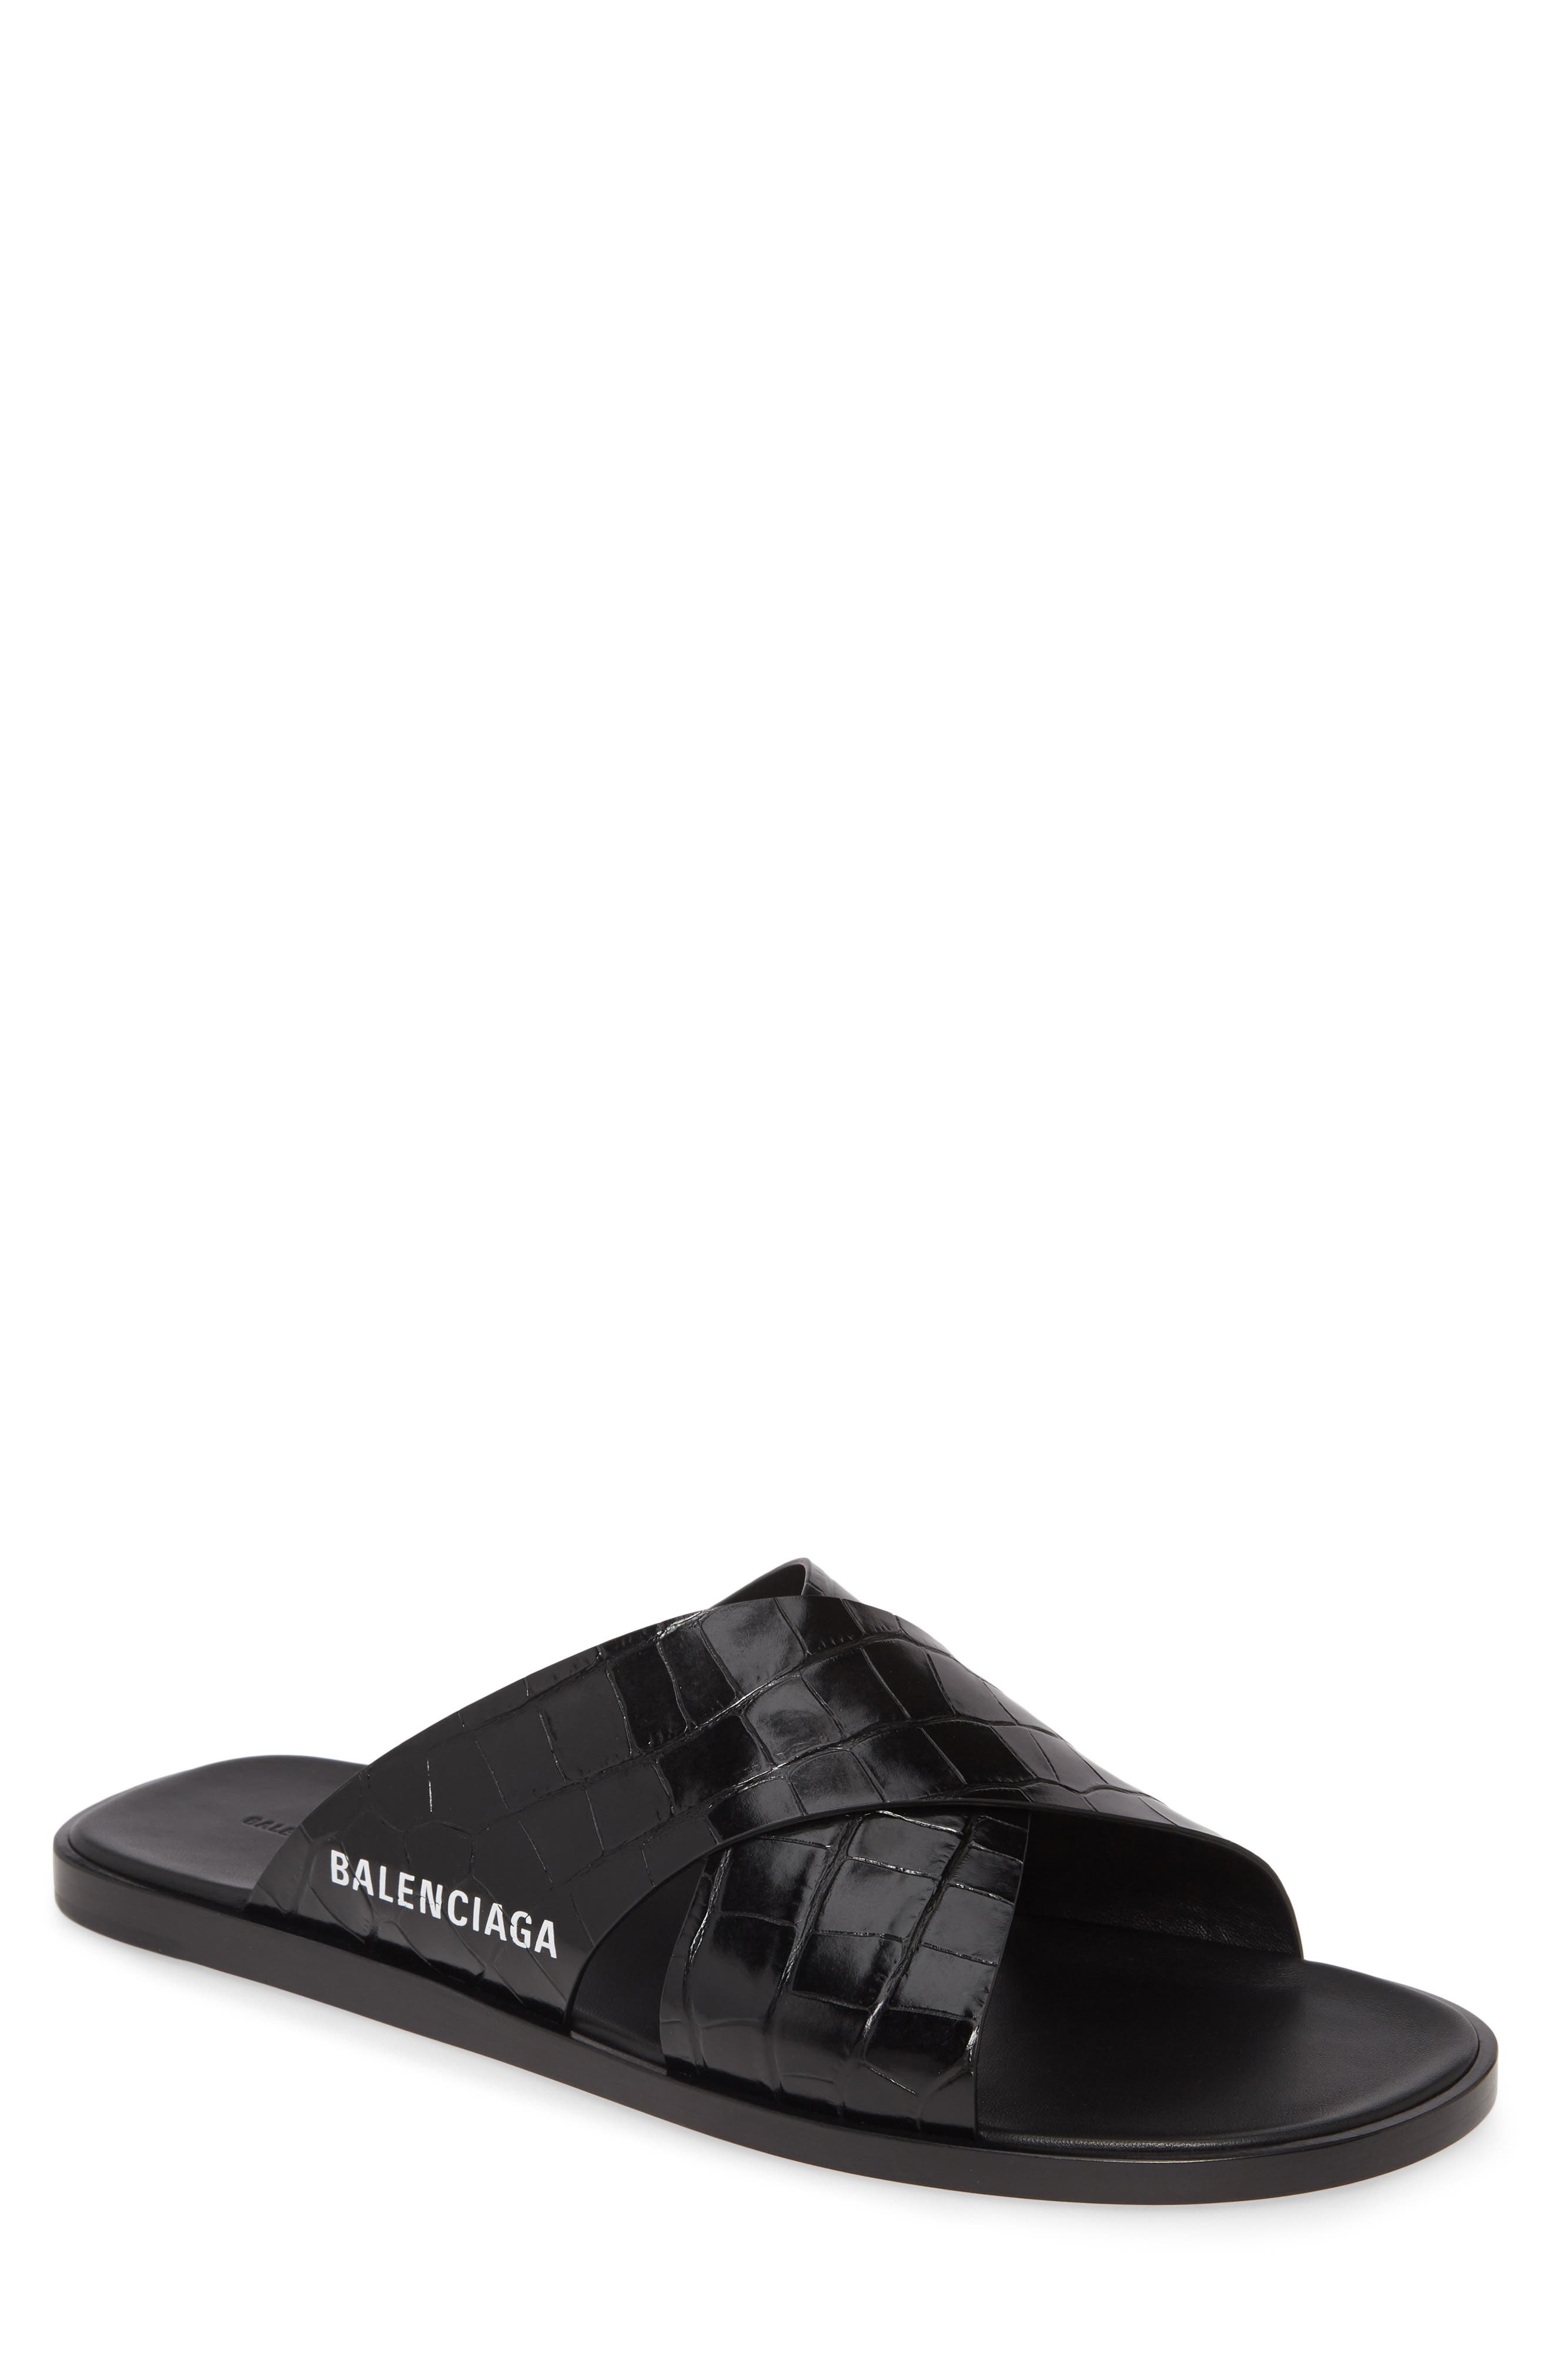 Balenciaga Slide Sandal (Men) | Nordstrom